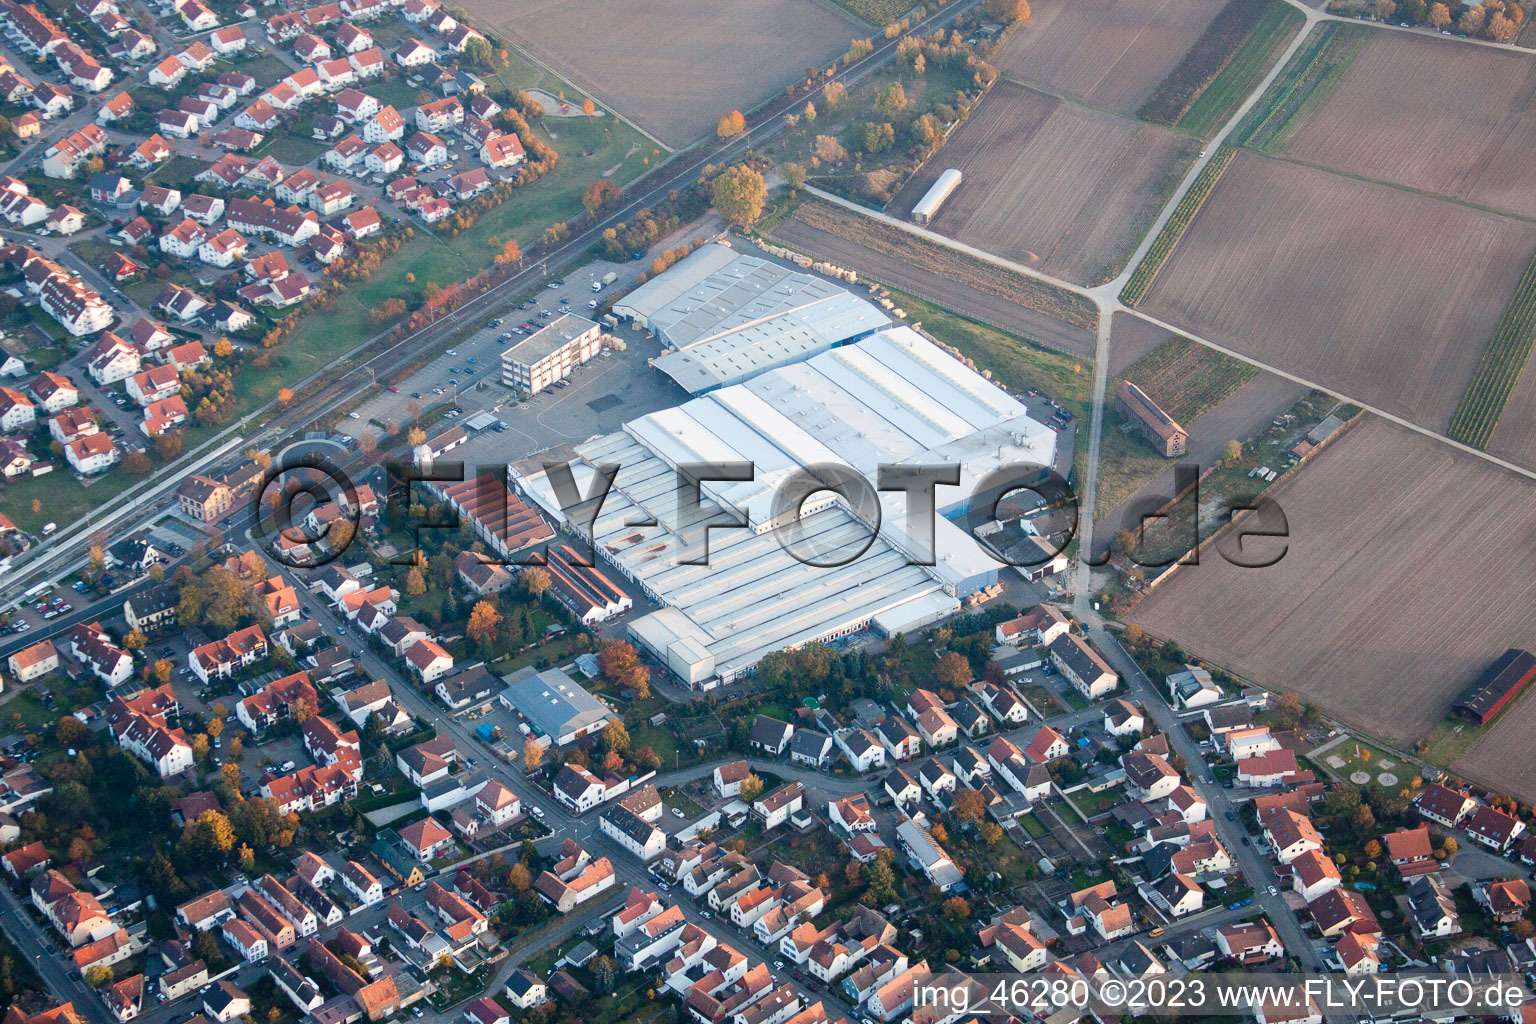 Aerial photograpy of Building and production halls on the premises of Kardex Remstar Produktion Deutschland GmbH Kardex-Platz in the district Sondernheim in Bellheim in the state Rhineland-Palatinate